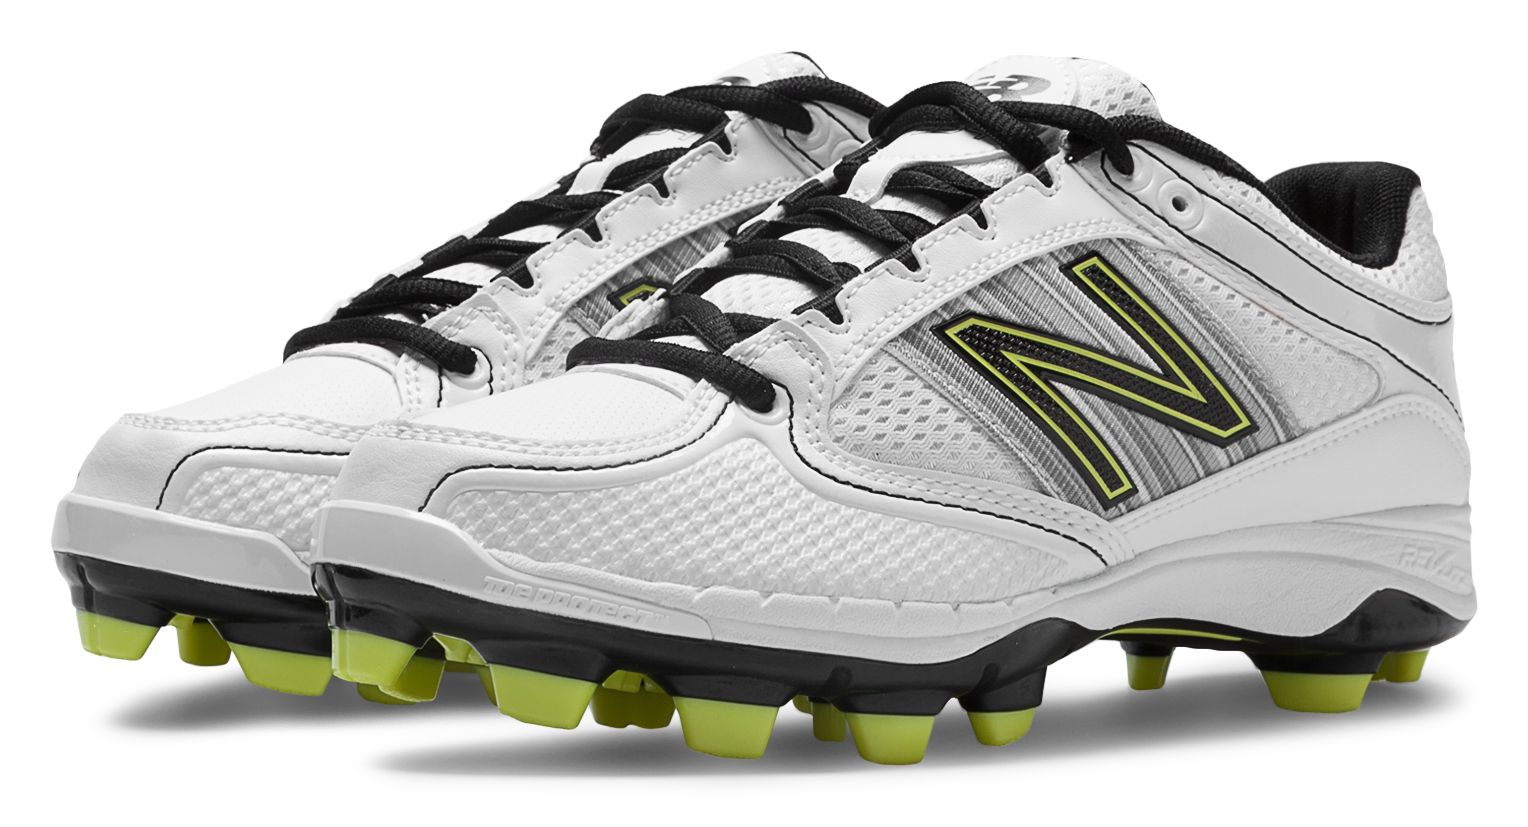 New Balance Womens Softball Cleat 7534 Shoes White | eBay